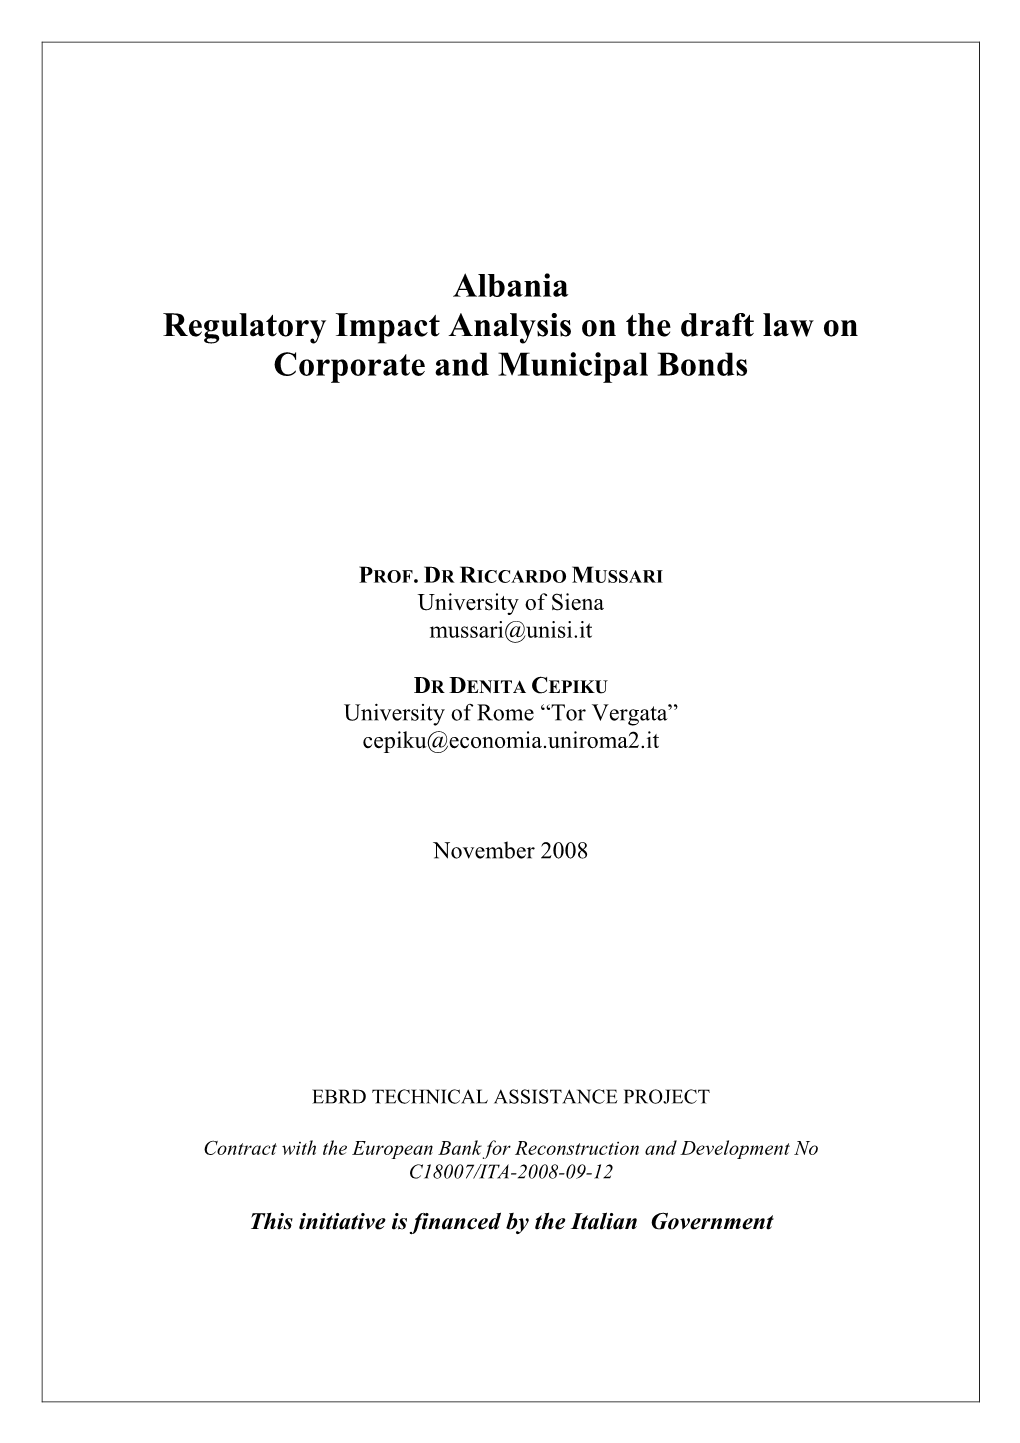 Albania Regulatory Impact Analysis on the Draft Law on Corporate and Municipal Bonds